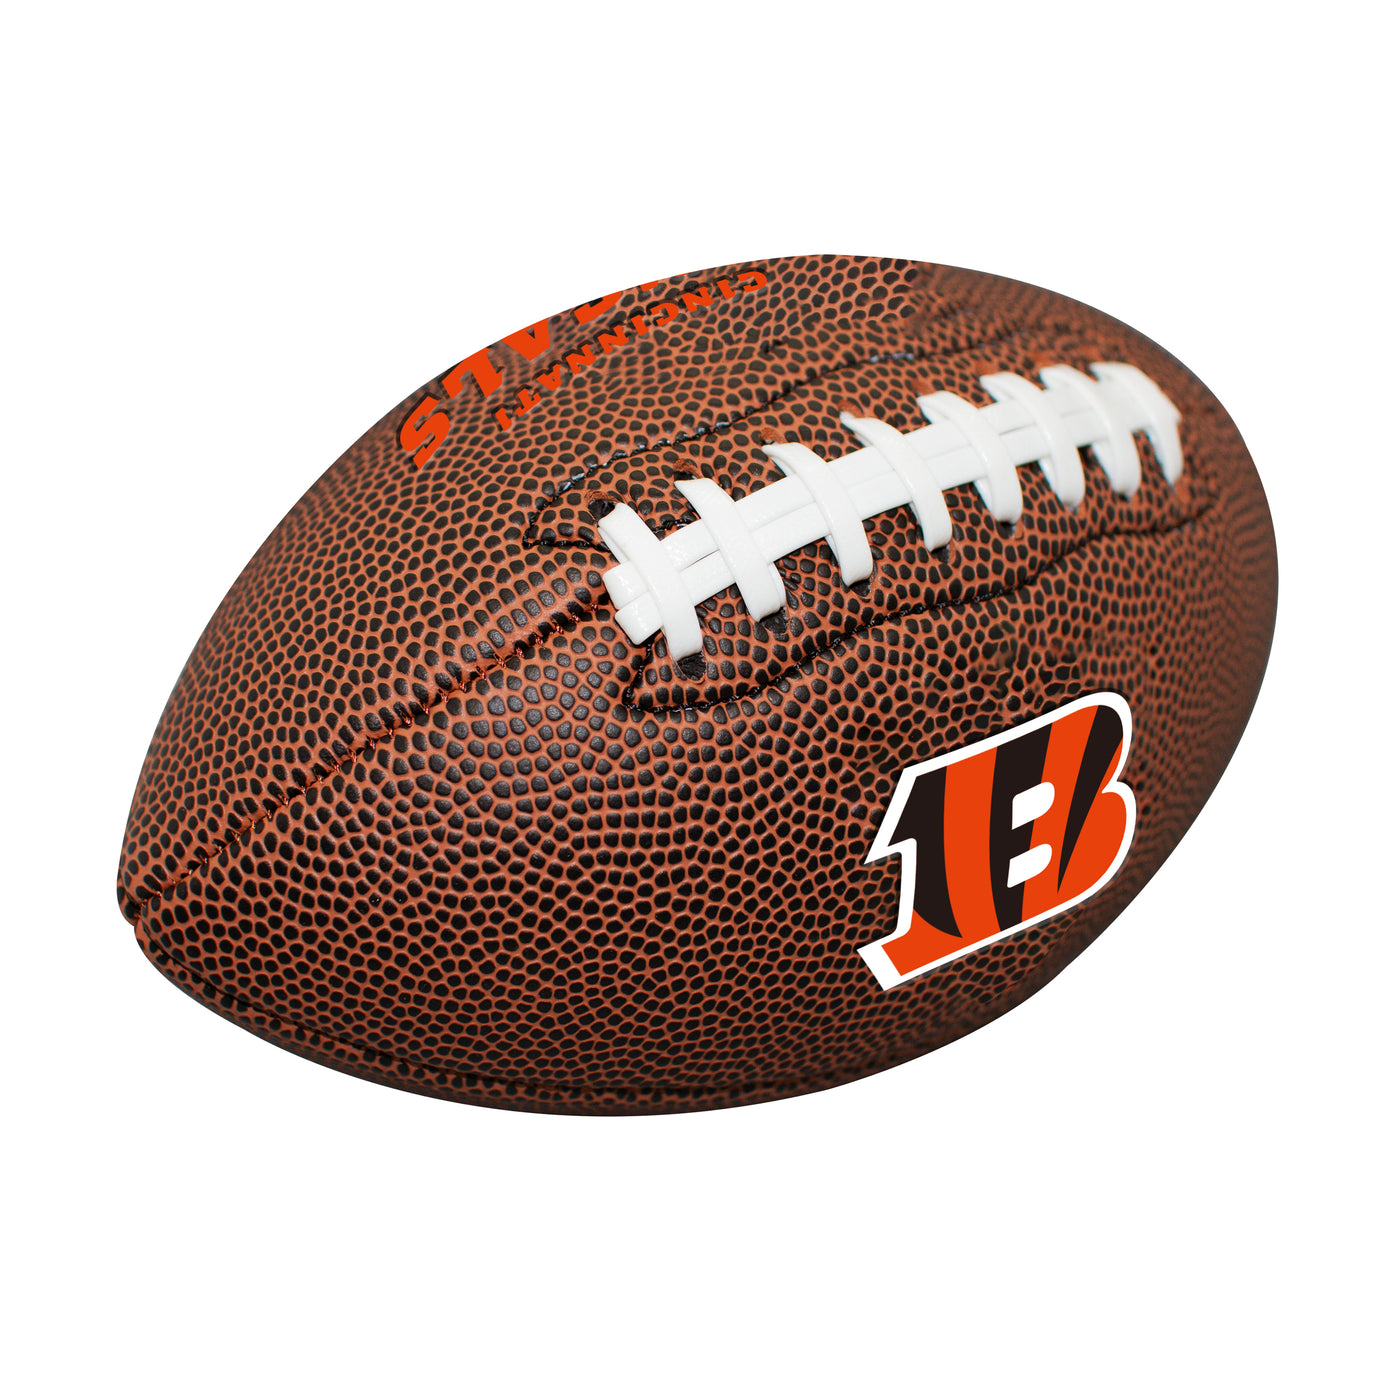 Cincinnati Bengals Mini Size Composite Football